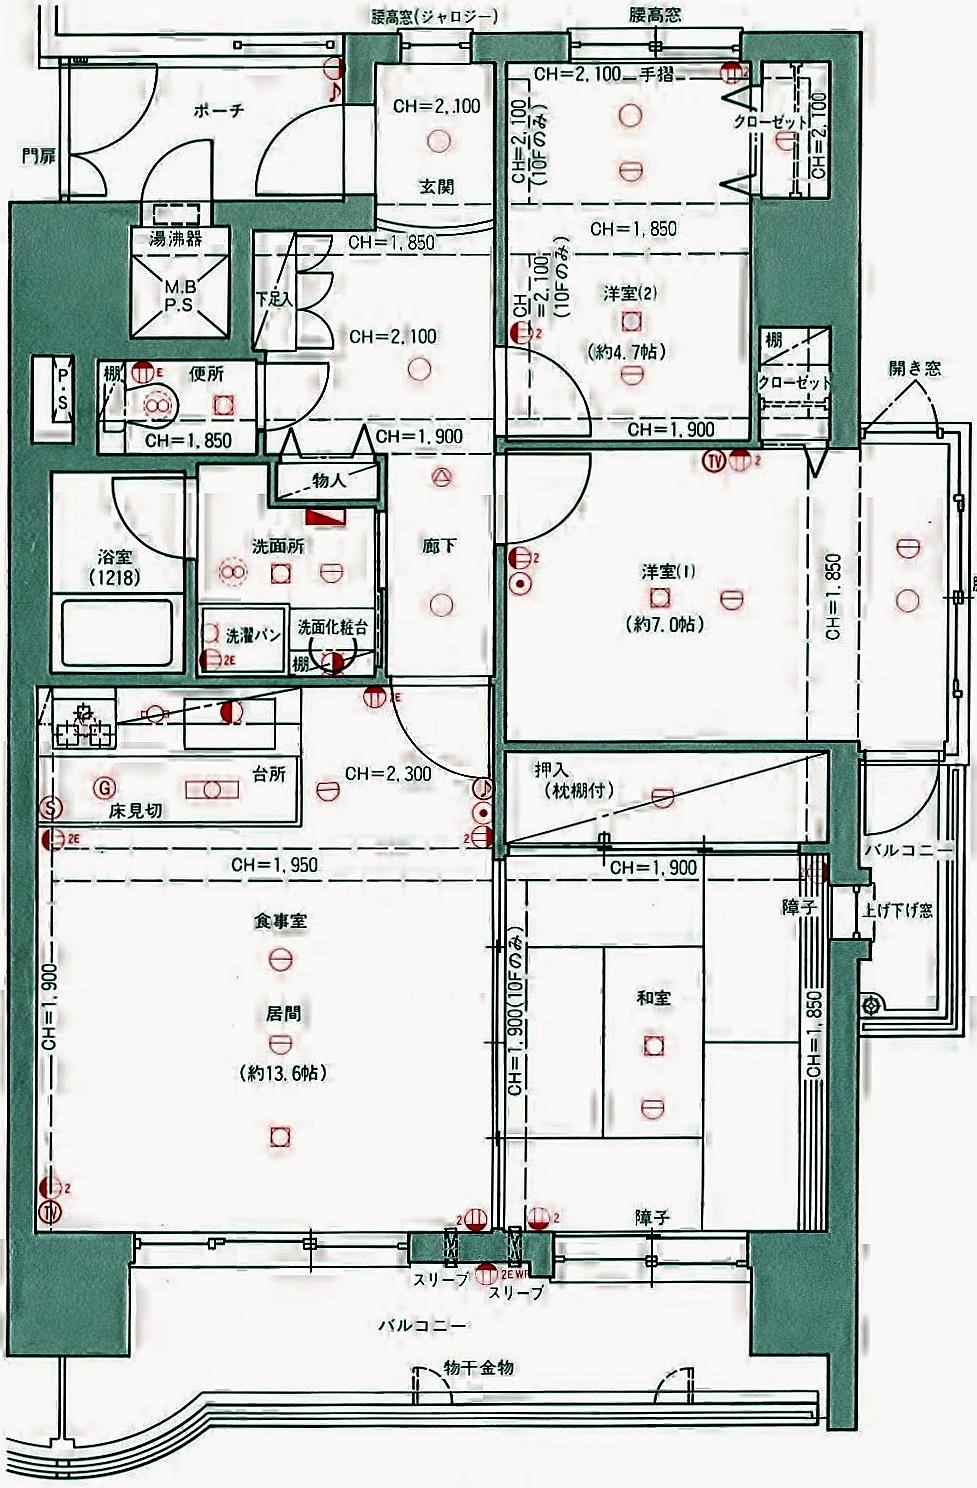 Floor plan. 3LDK, Price 19,800,000 yen, Occupied area 79.61 sq m , Balcony area 13.1 sq m